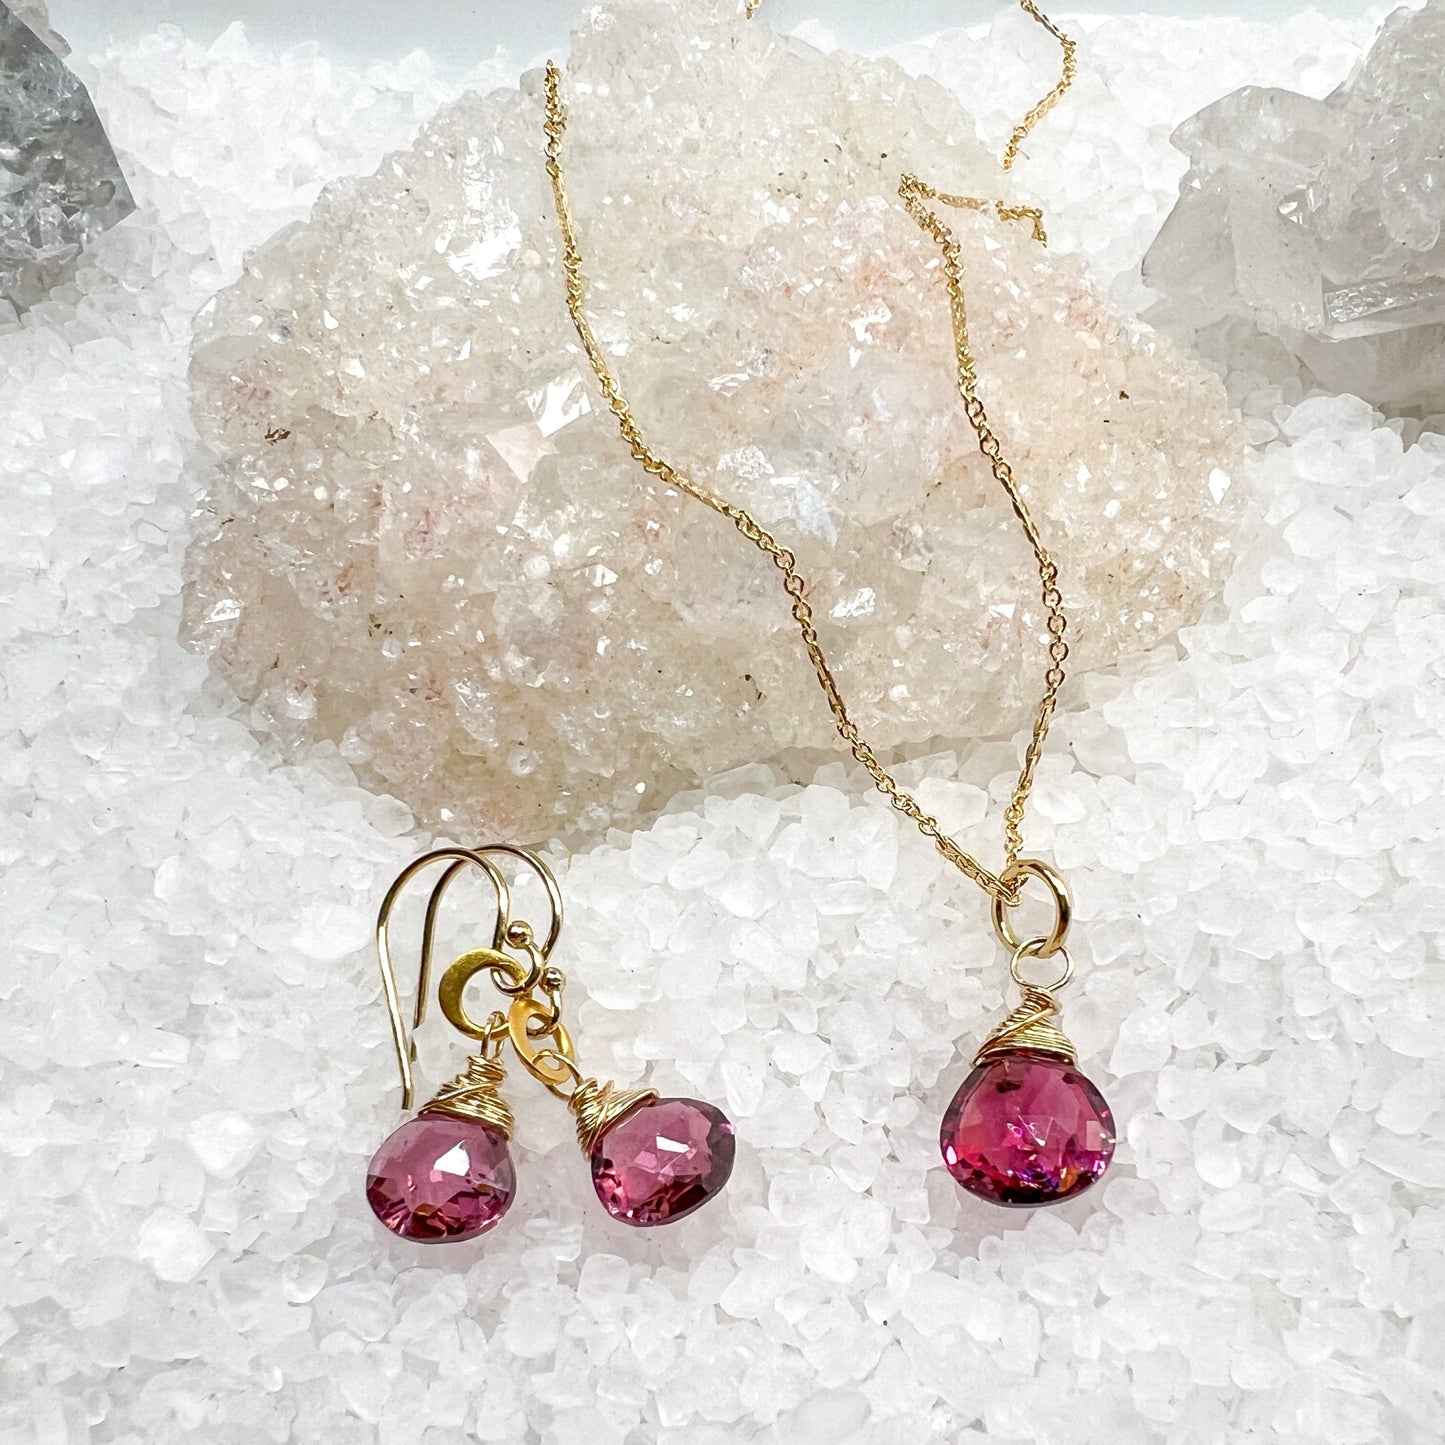 rubillite tourmaline necklace & earrings